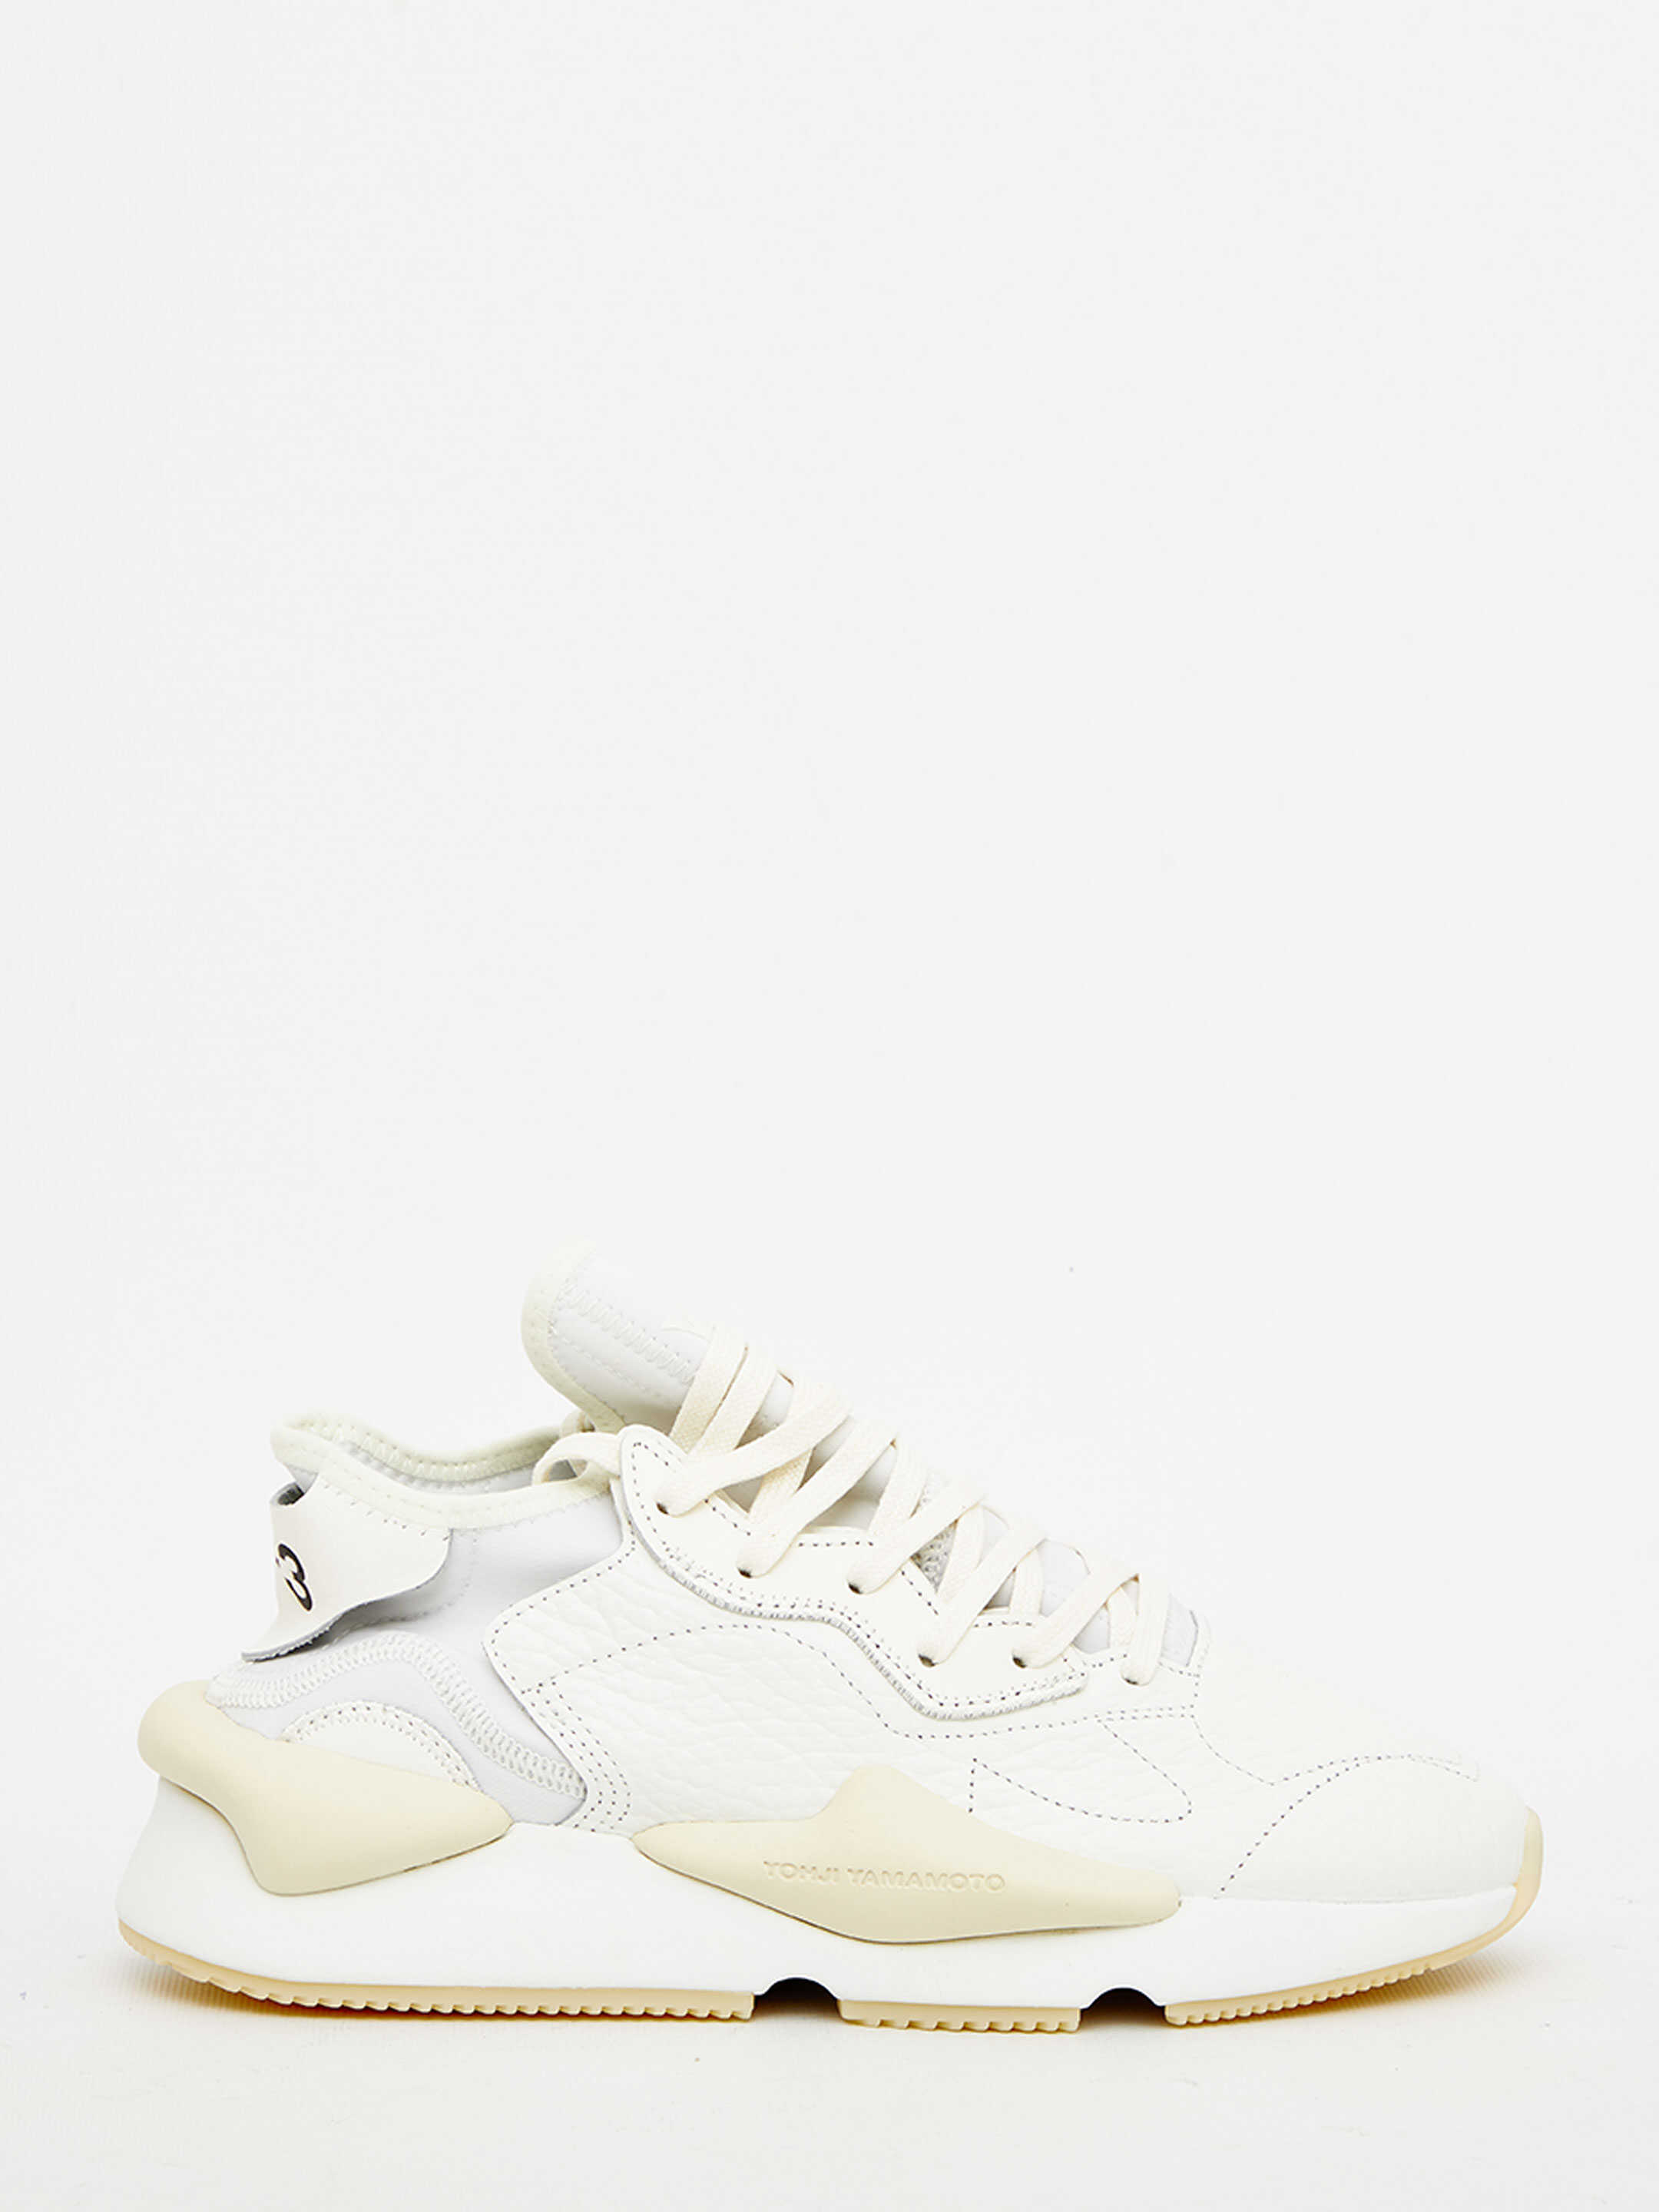 adidas Y-3 by Yohji Yamamoto Kaiwa Sneakers White